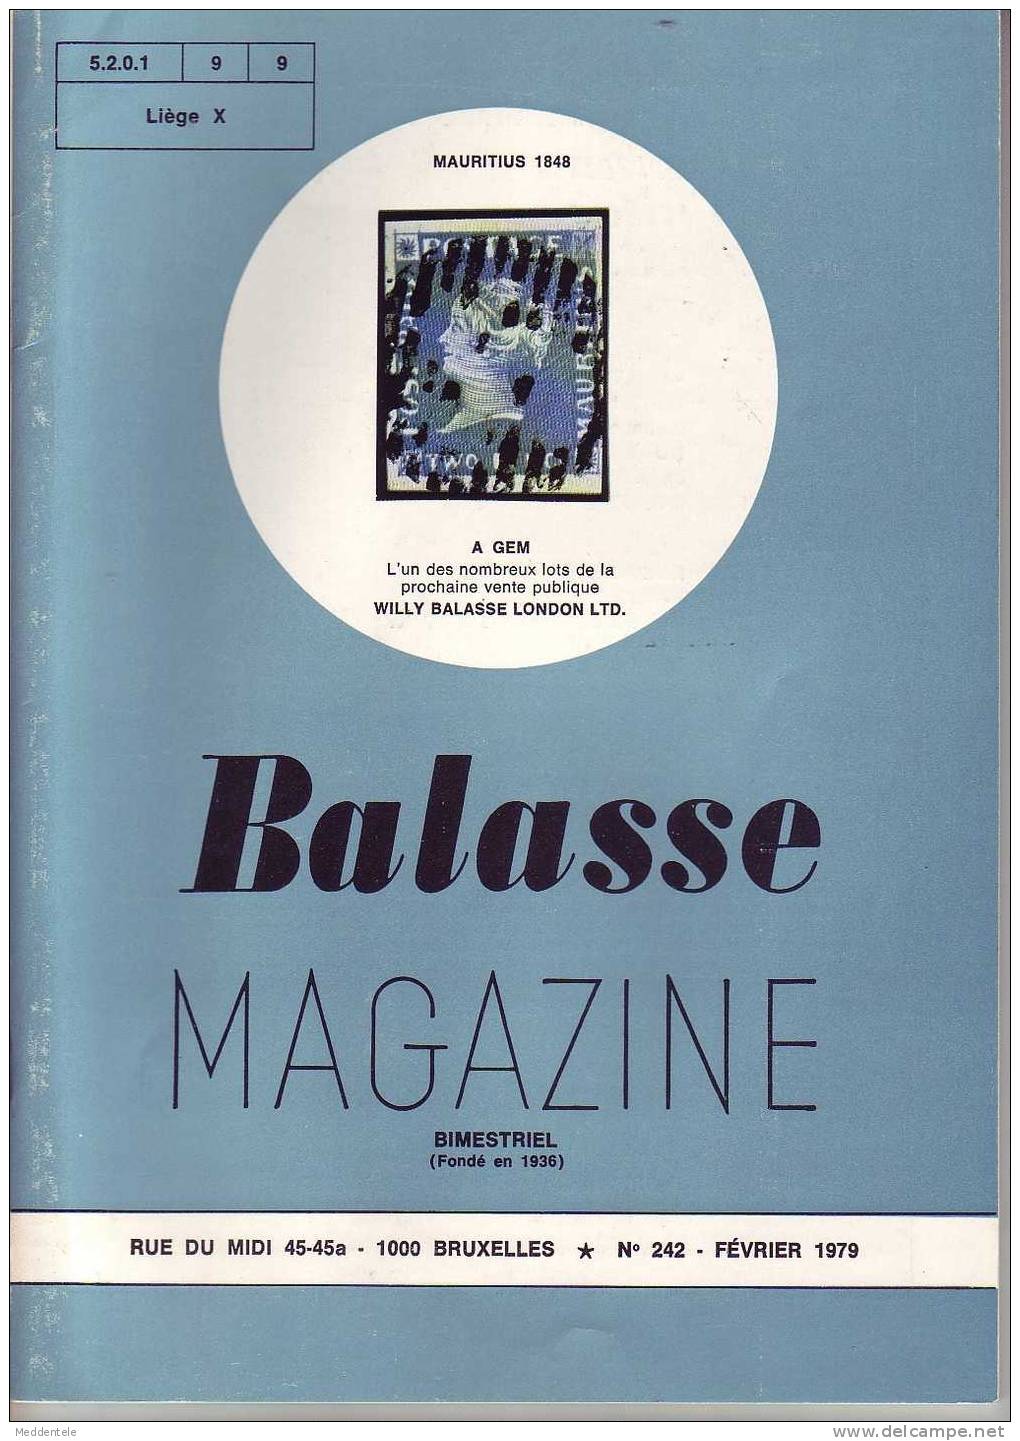 BALASSE MAGAZINE N° 242 - French (from 1941)